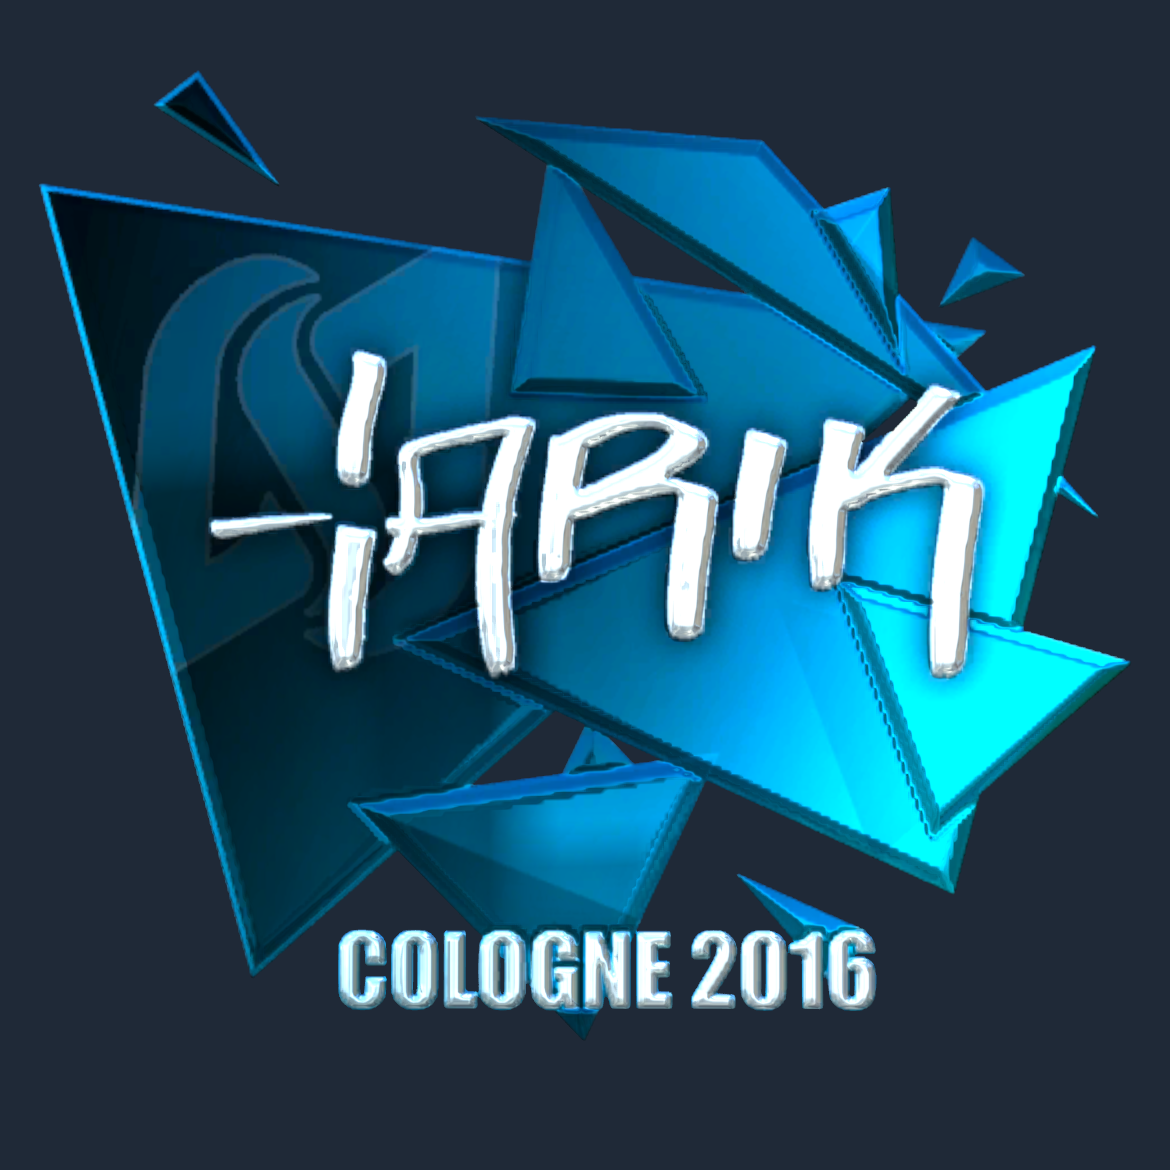 Sticker | tarik (Foil) | Cologne 2016 Screenshot